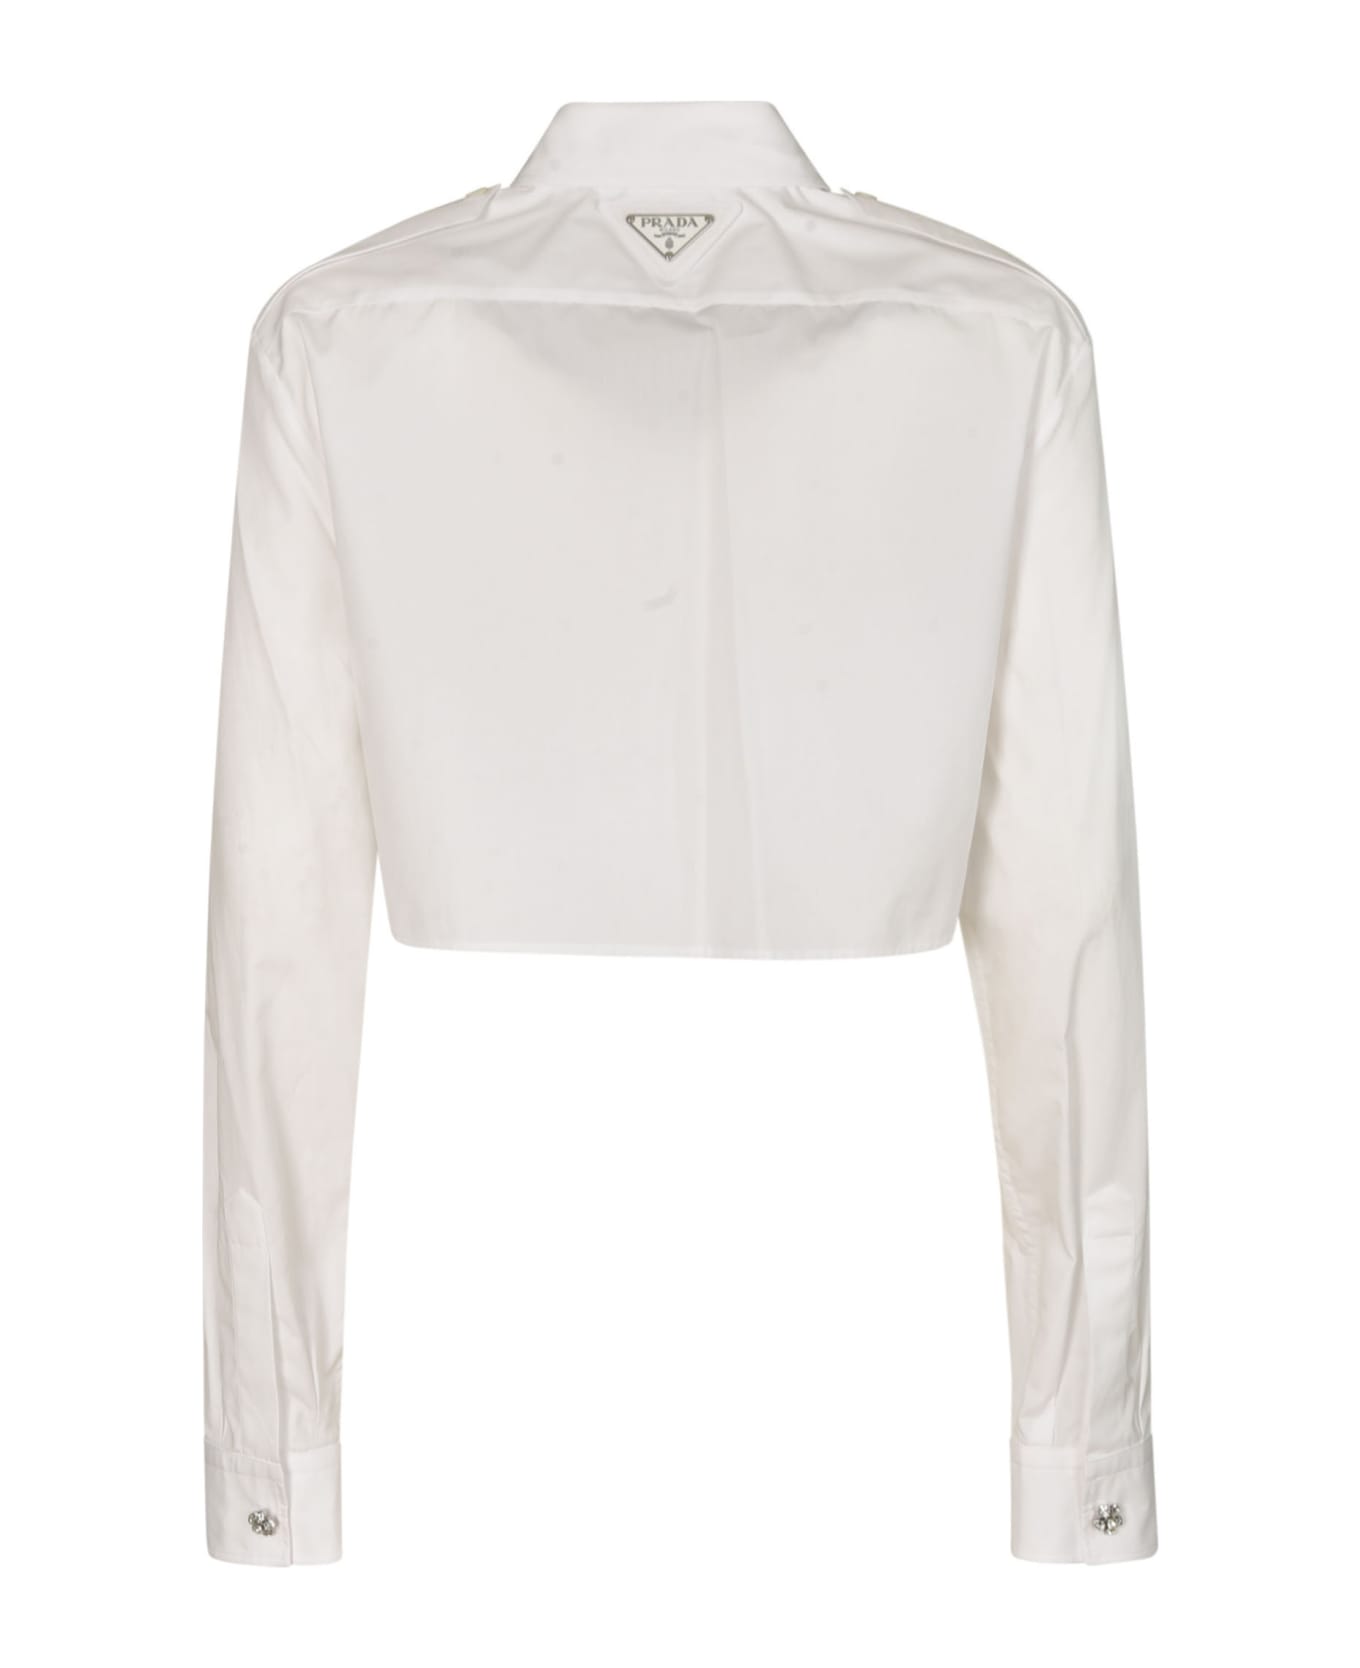 Prada Forum Pocket Front Cropped Shirt - White